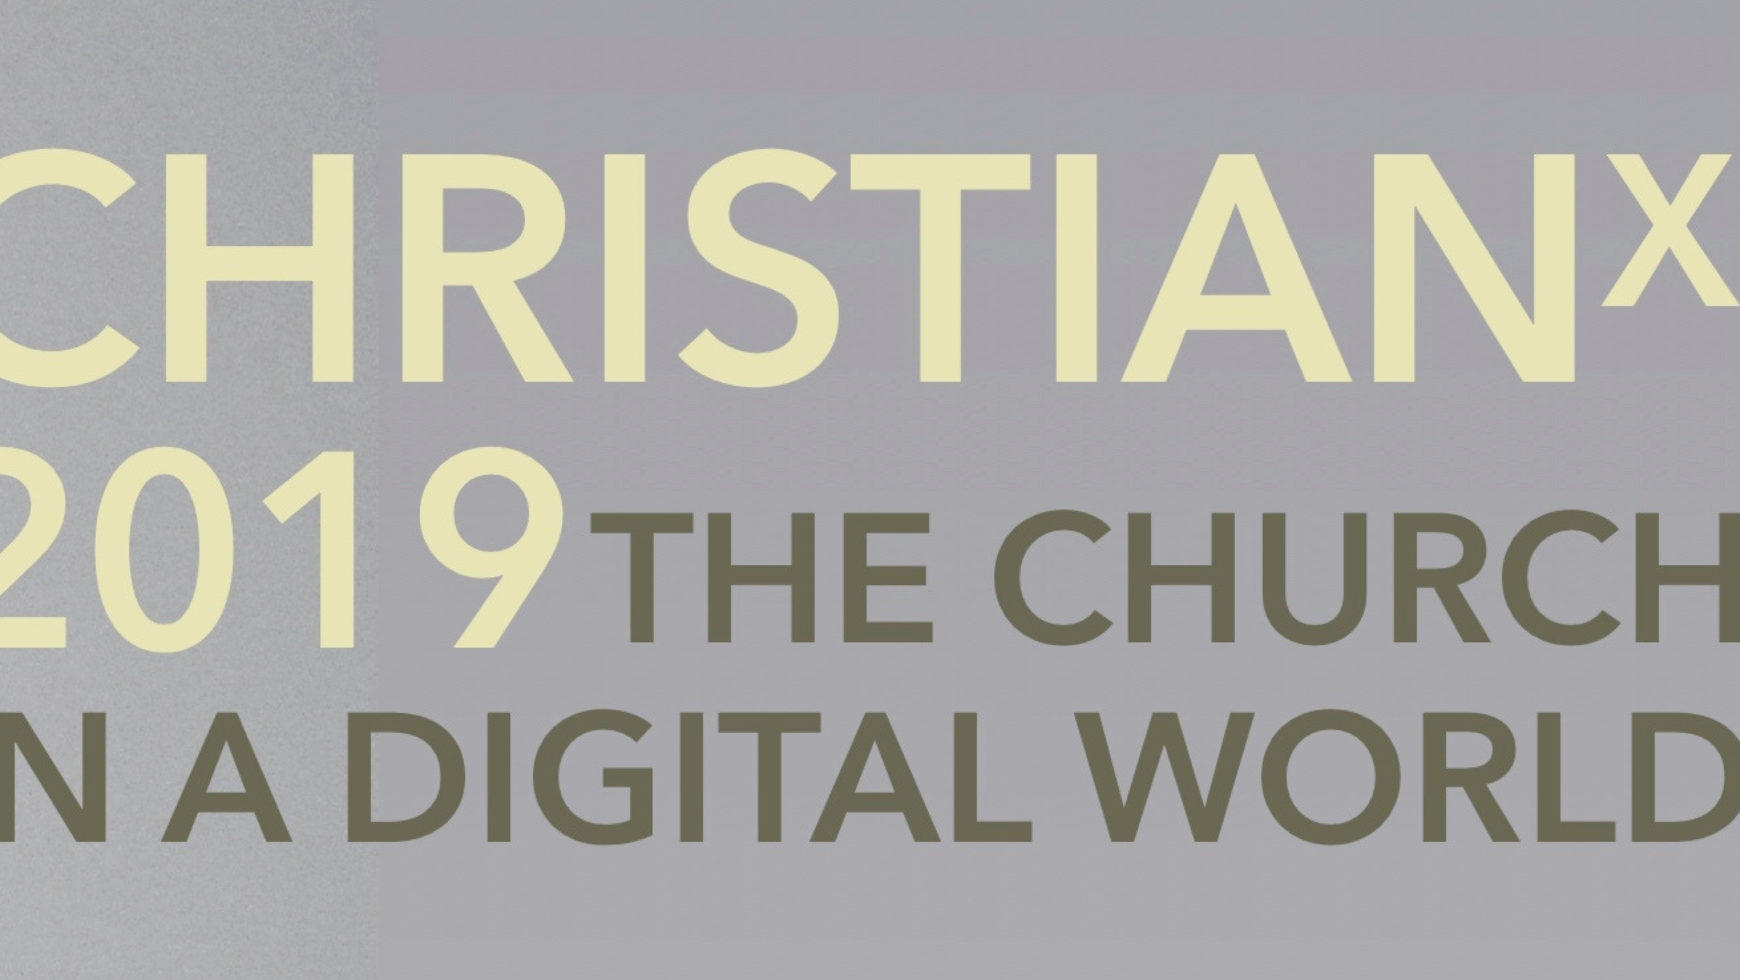 CHRISTIANX 2019: THE CHURCH IN A DIGITAL WORLD